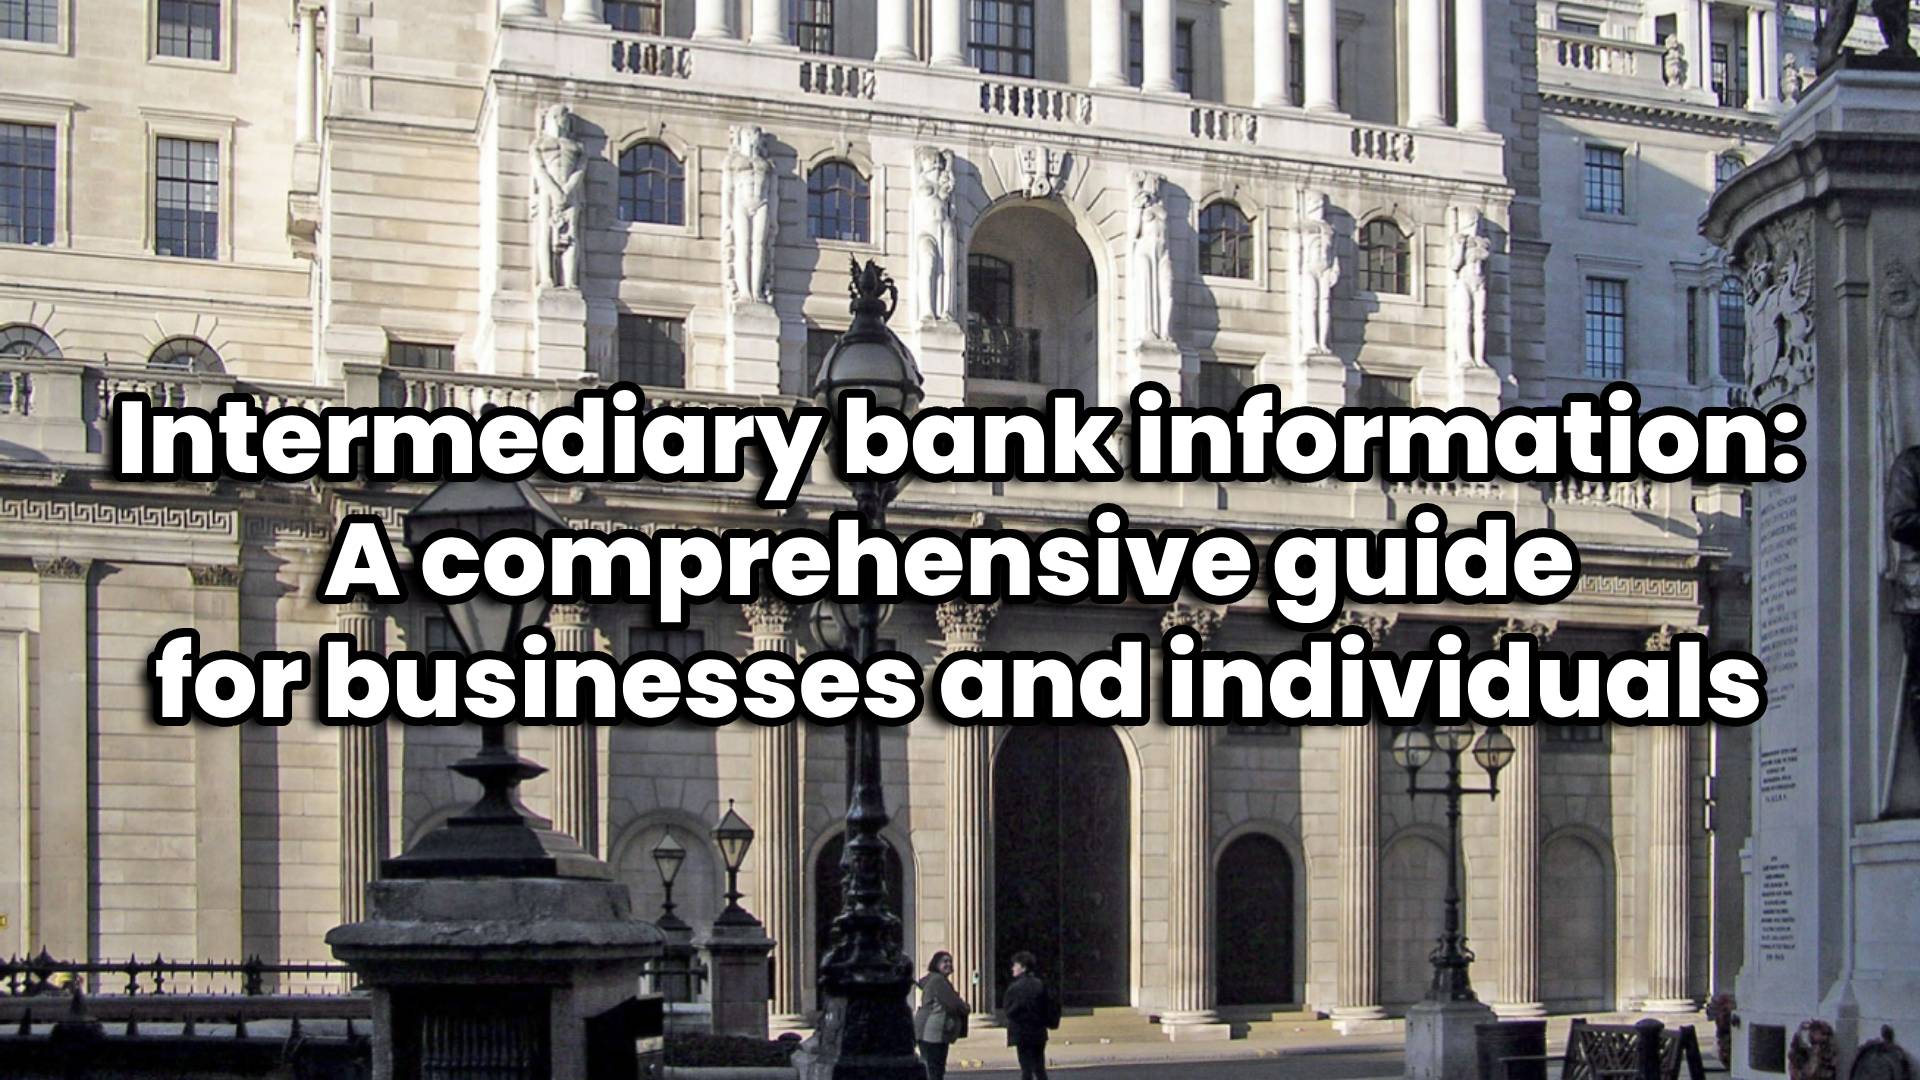 Intermediary bank information